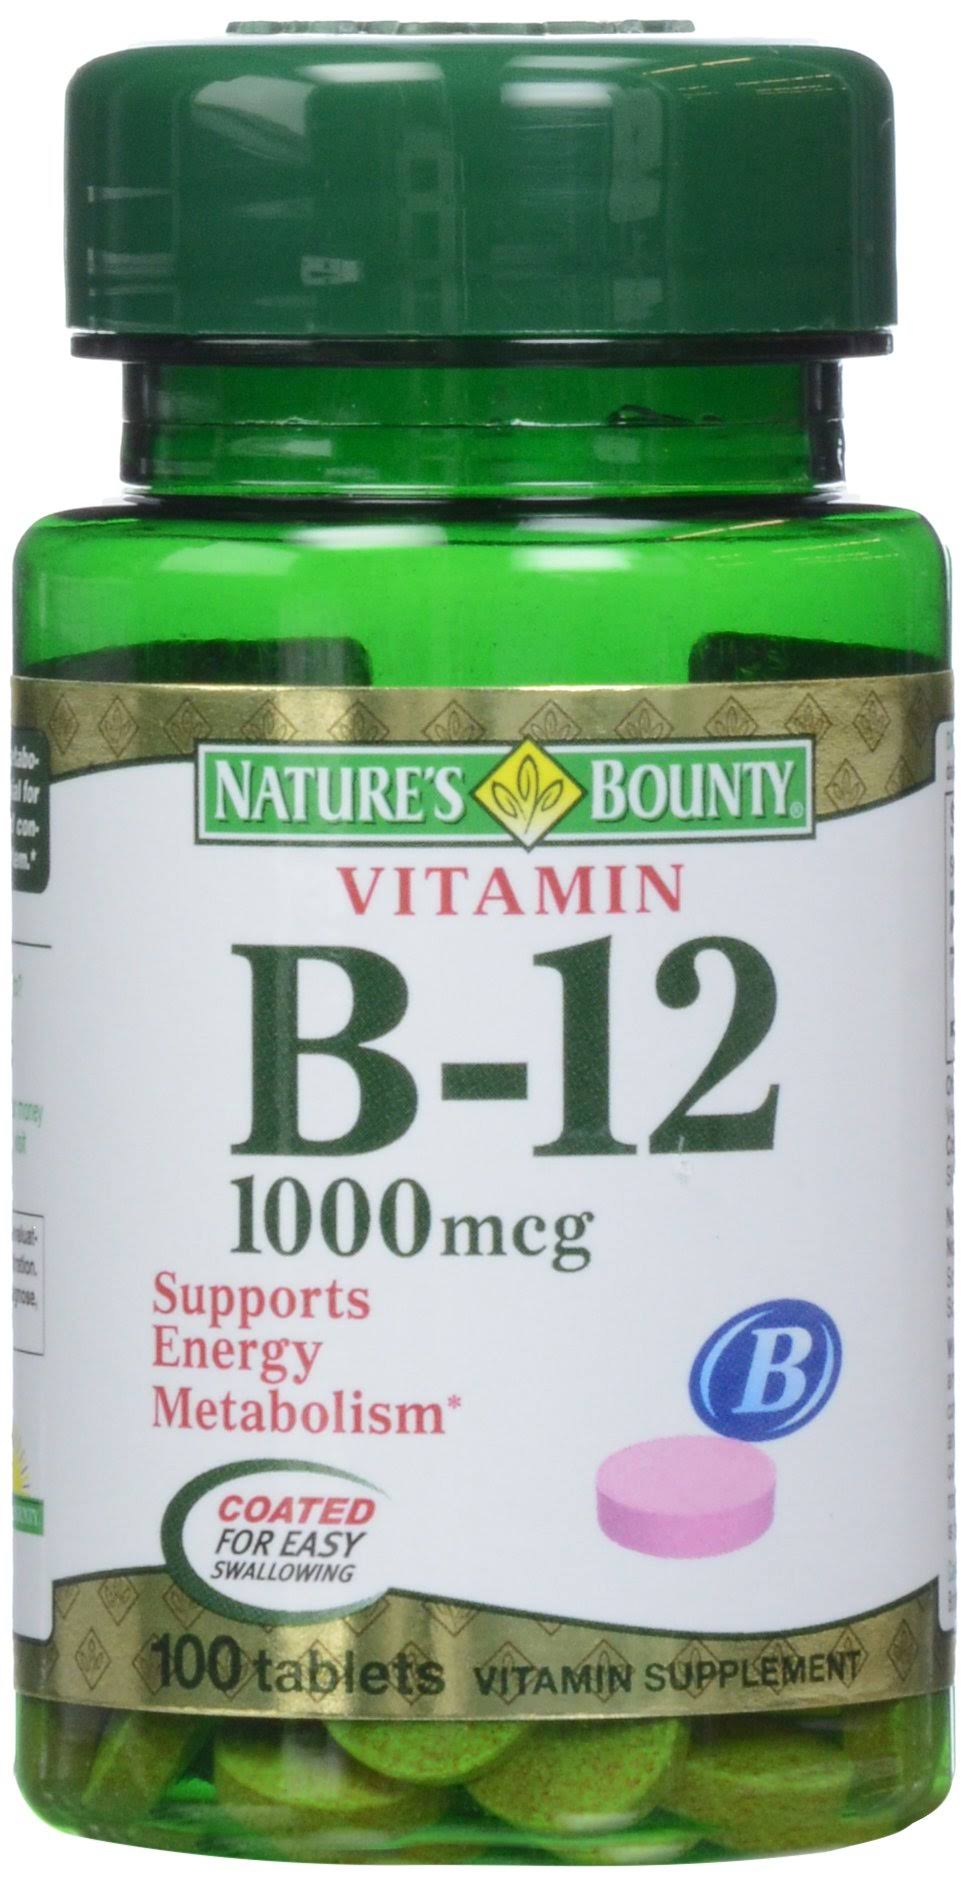 Nature's Bounty Natural Vitamin B12 Supplement - 100 Tablets